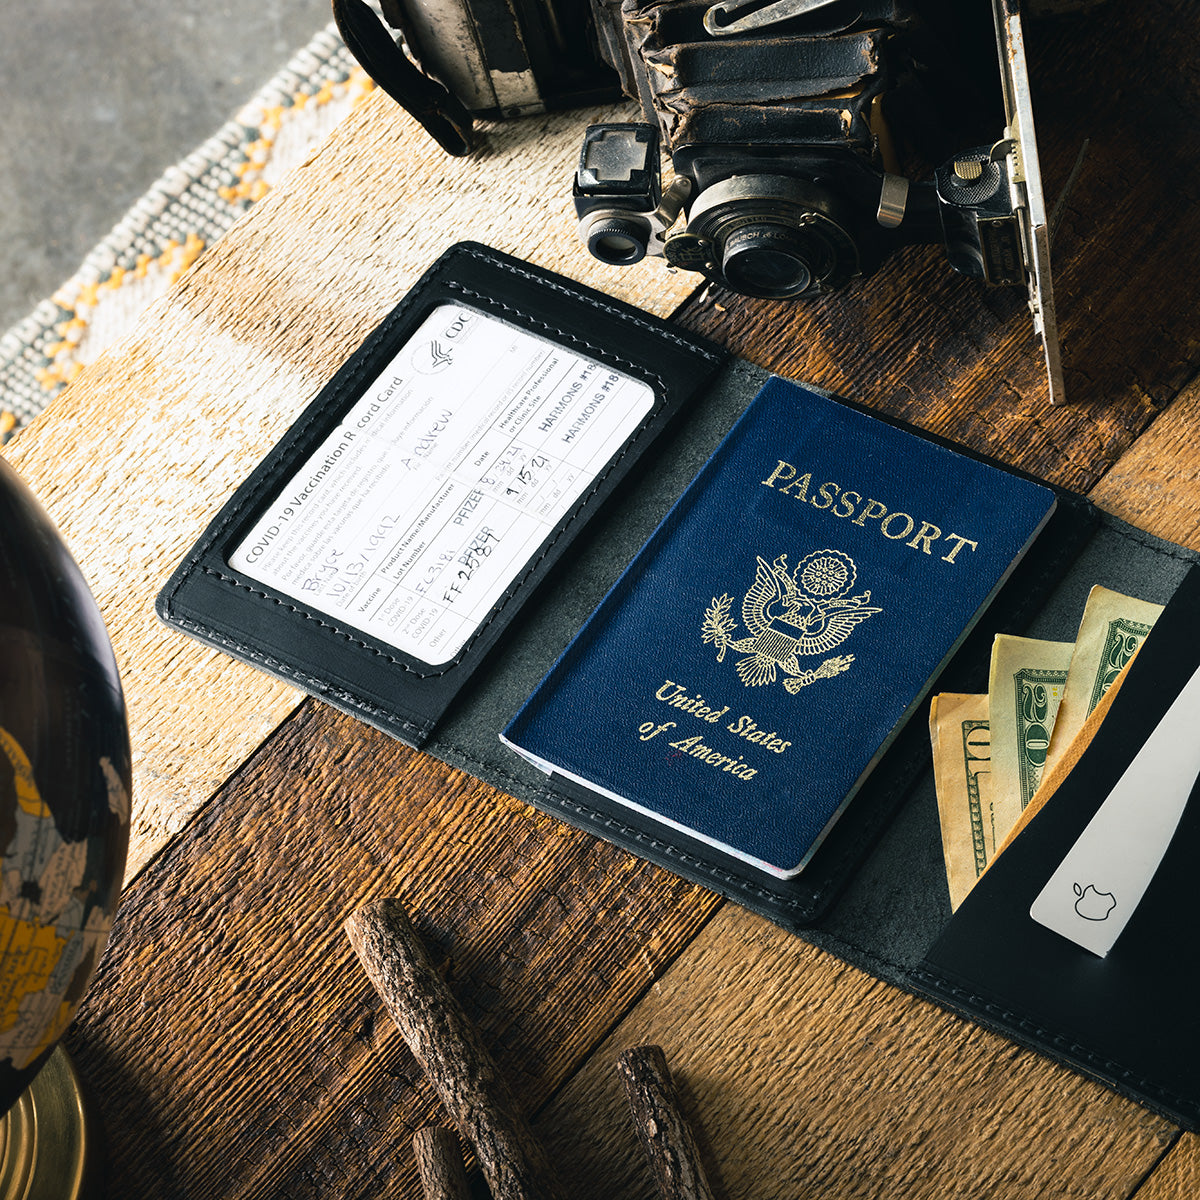 Monogrammed Leather Passport Holders & Sleeves